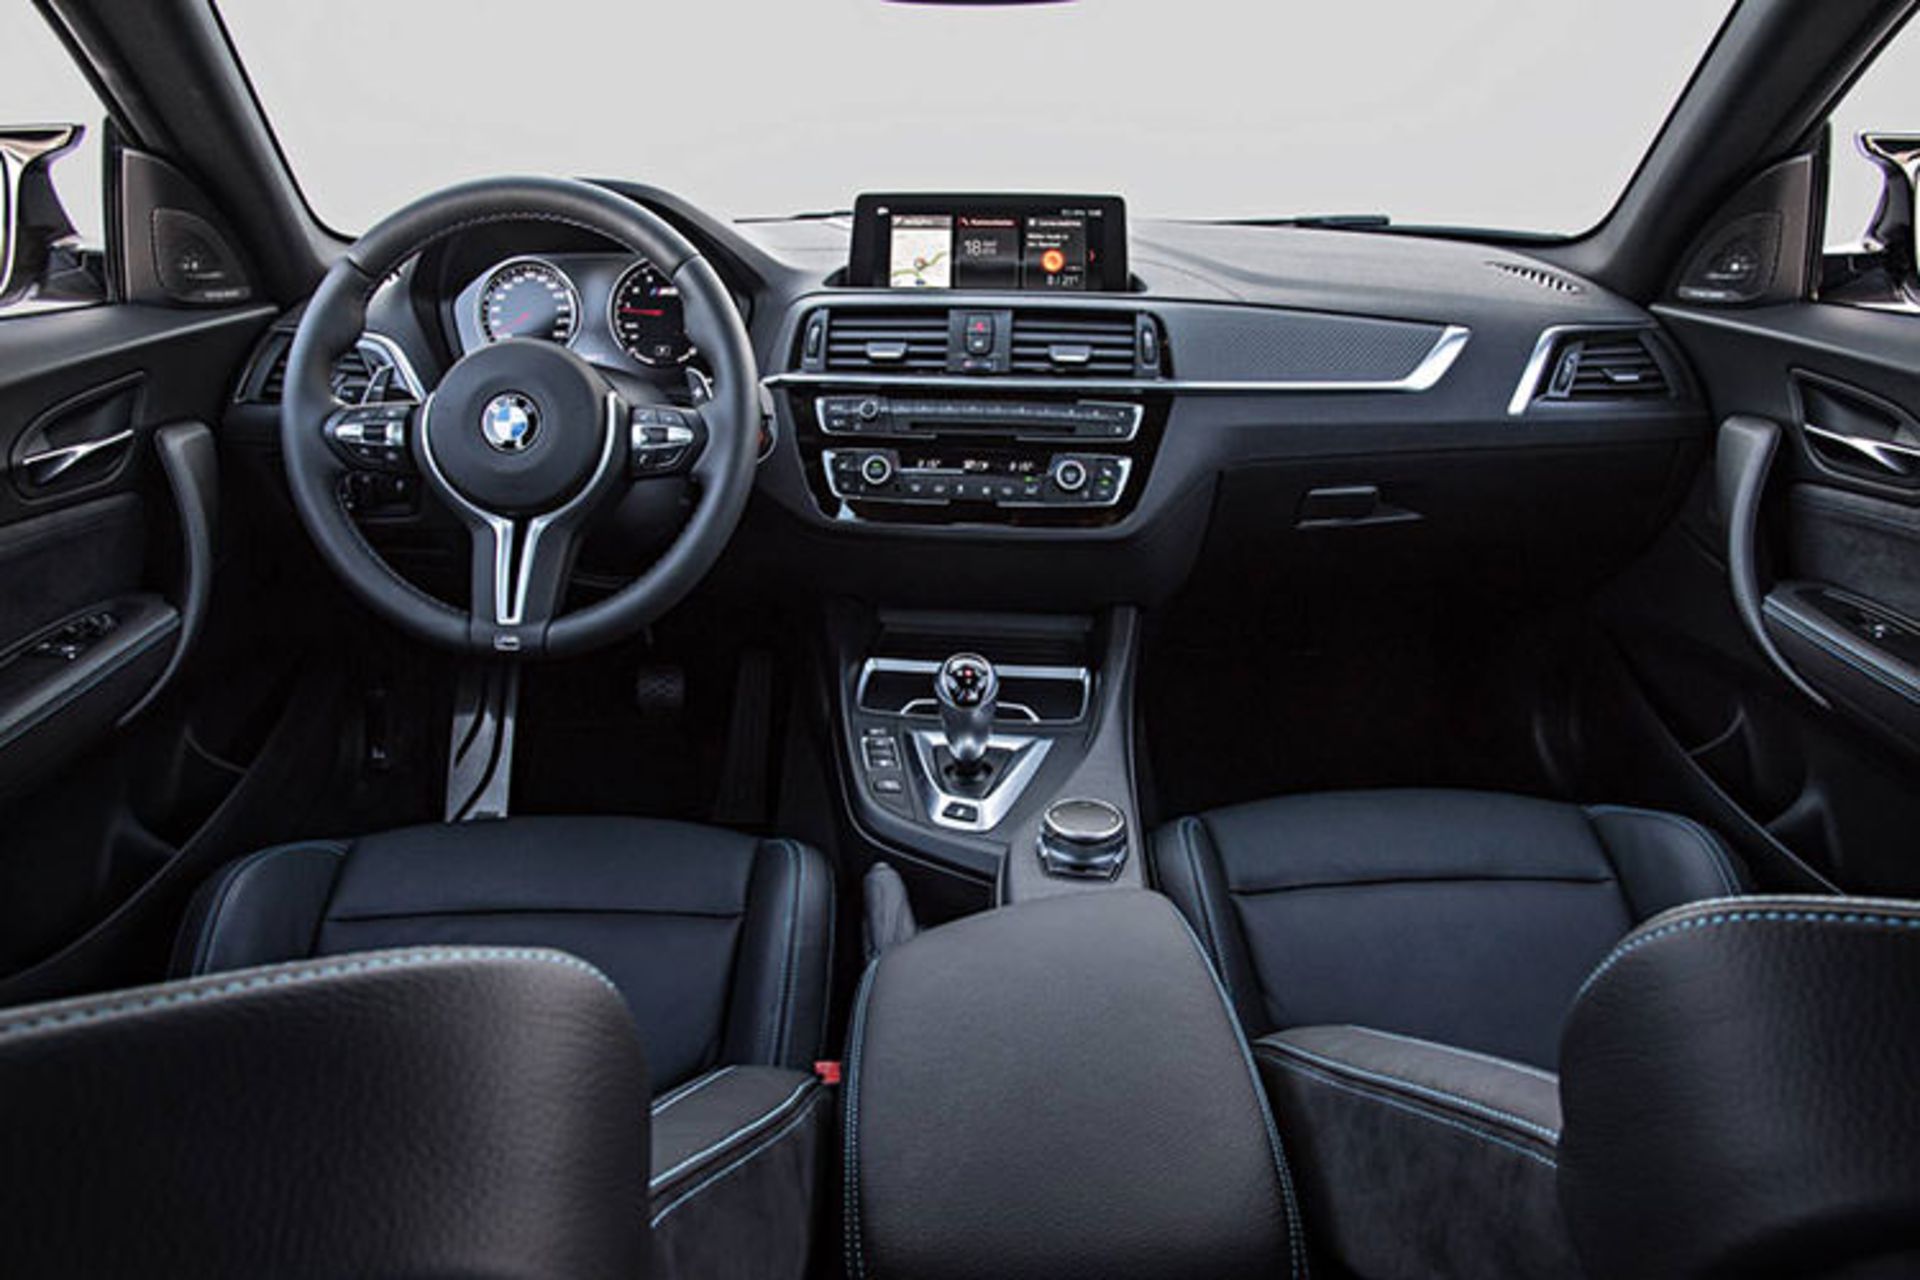 مرجع متخصصين ايران 2019 BMW M2 Competition / كوپه اسپرت بي‌ام‌و M2 كامپتيشن مدل 2019